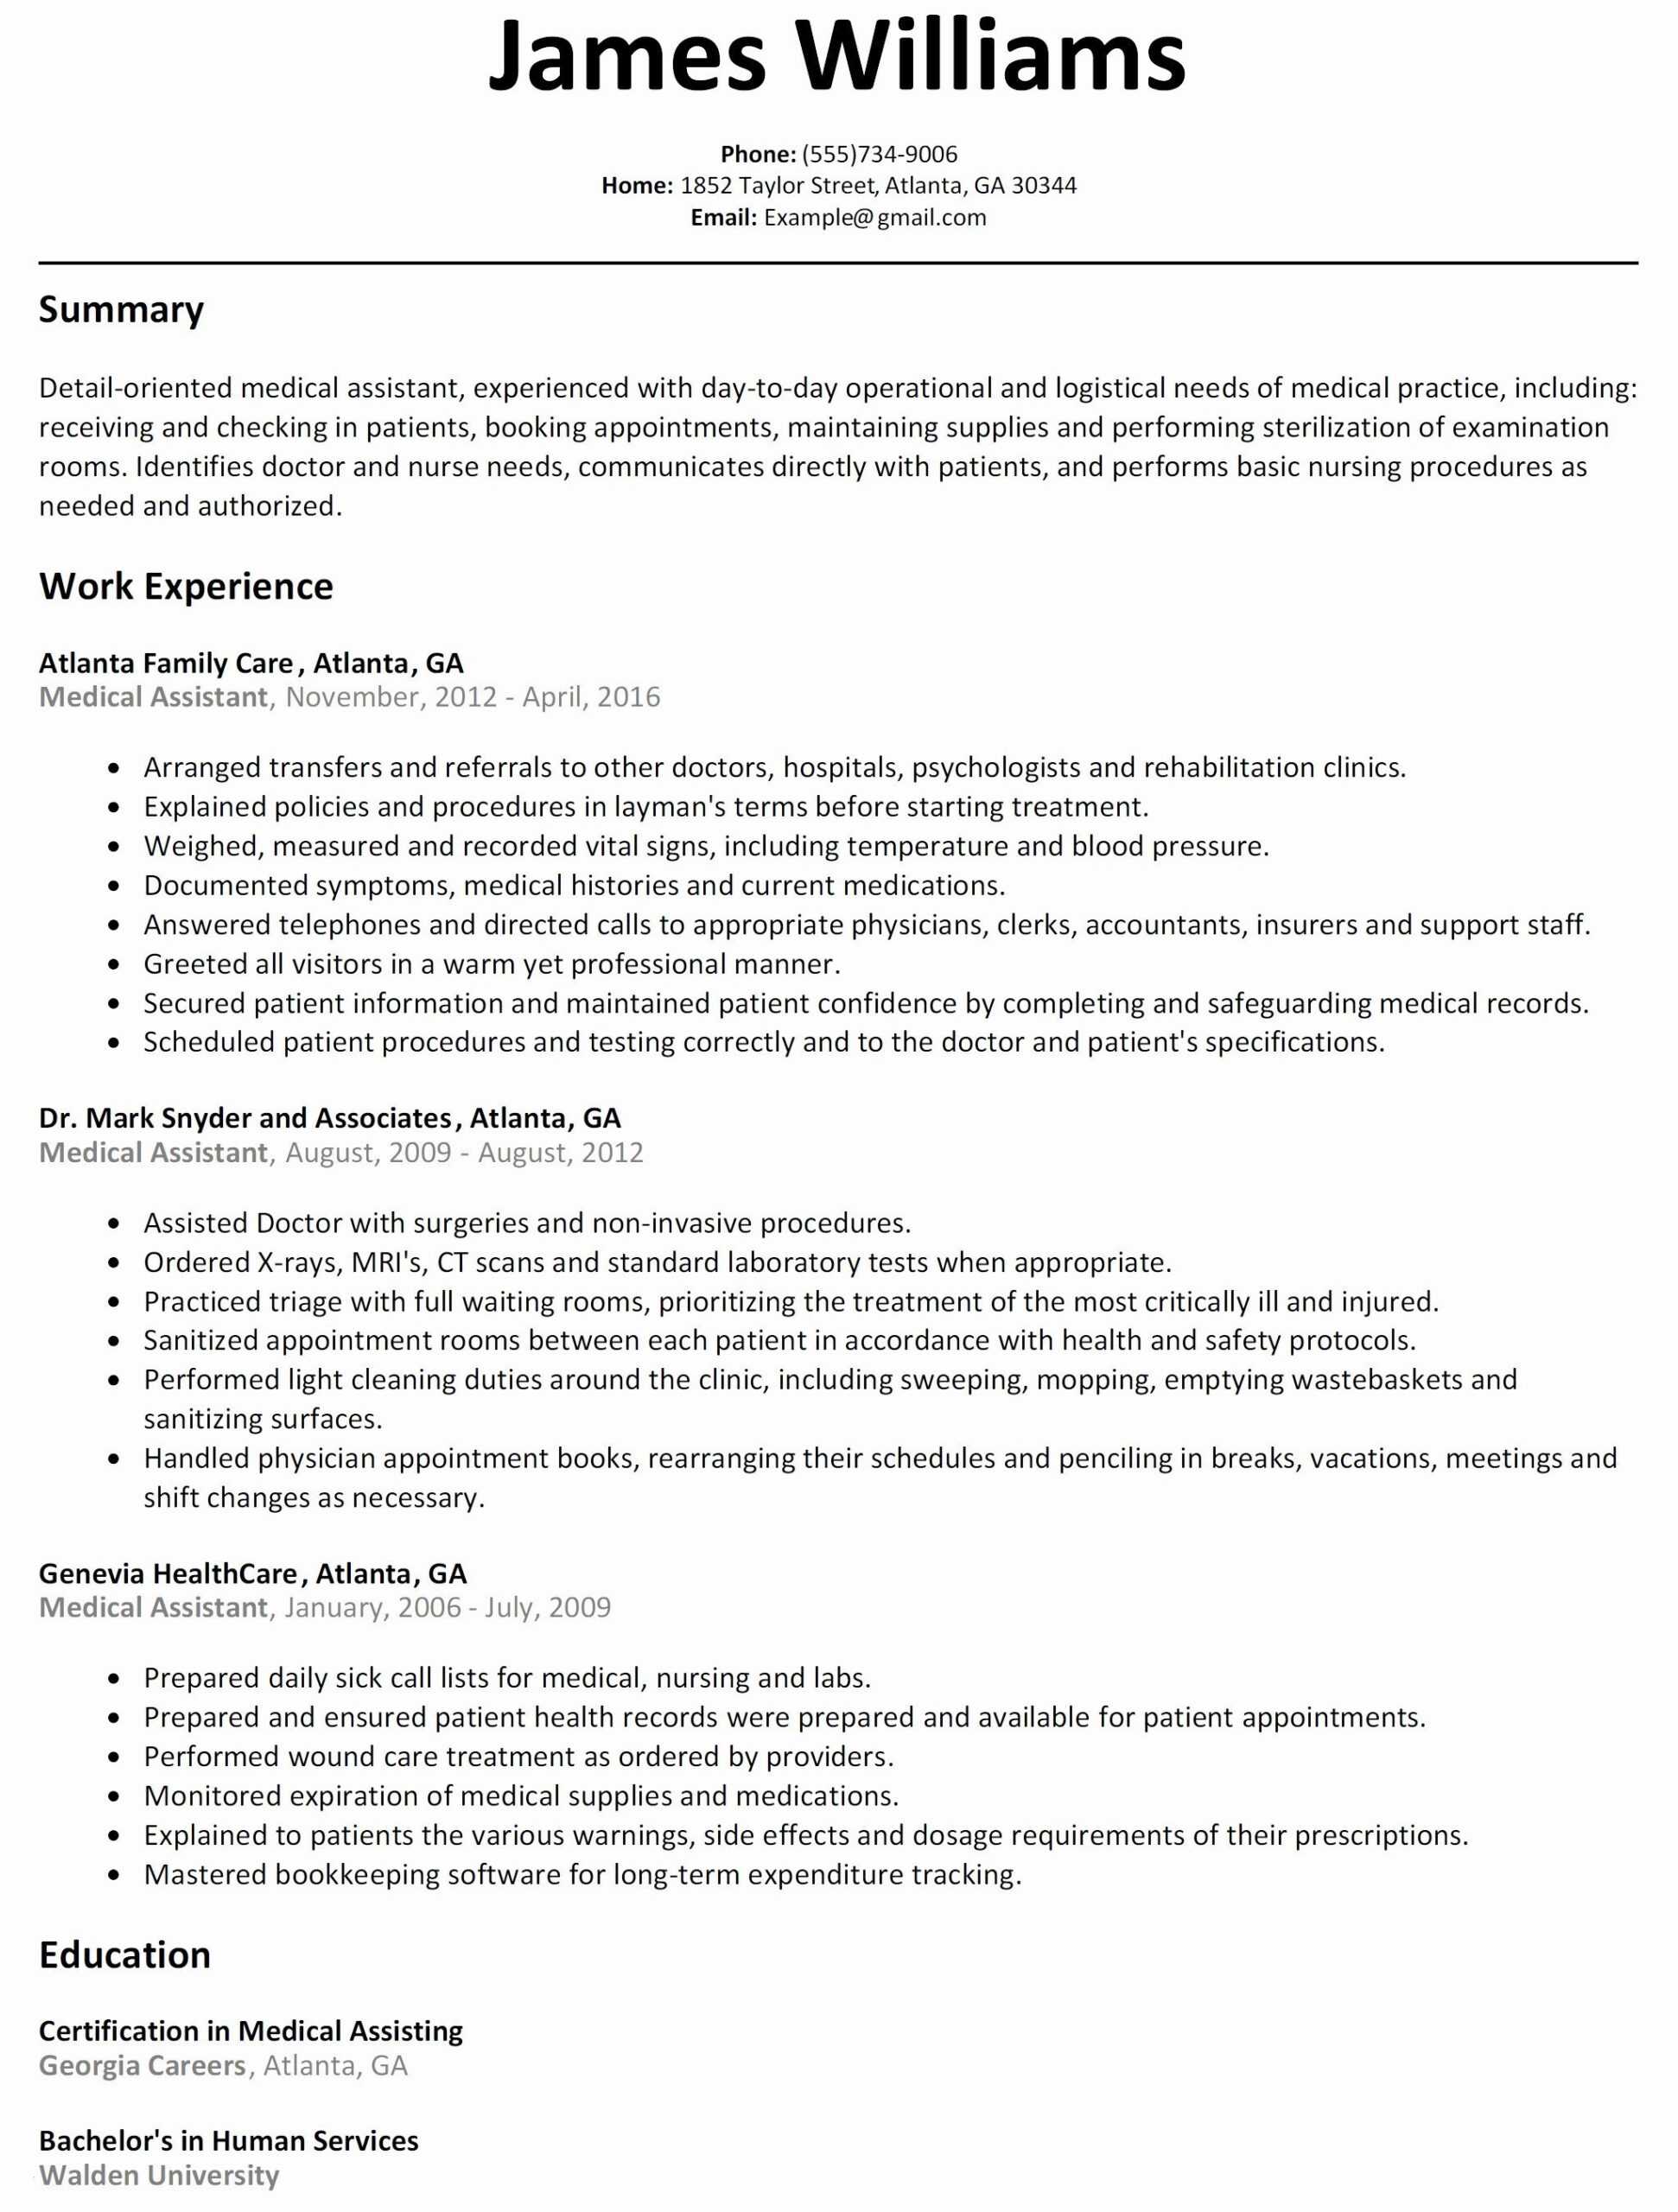 Interesting Resume | Nanokino Regarding Blank Resume Templates For Microsoft Word